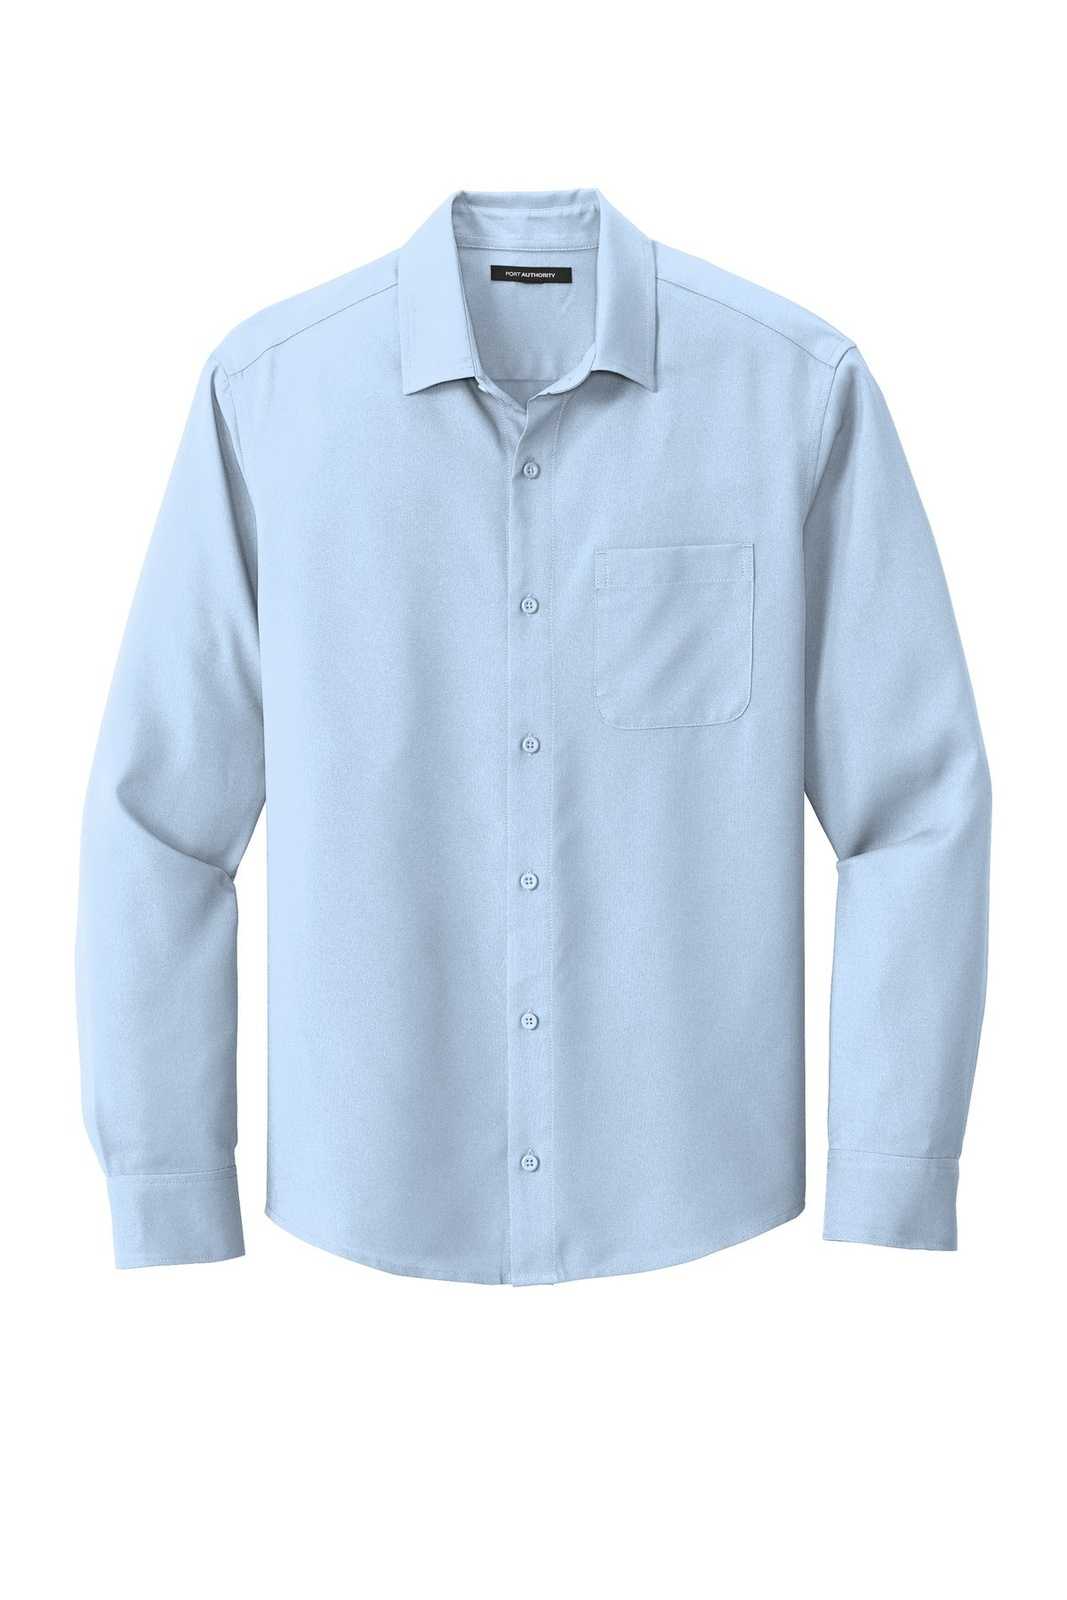 Port Authority W401 Long Sleeve Performance Staff Shirt - Cloud Blue - HIT a Double - 5